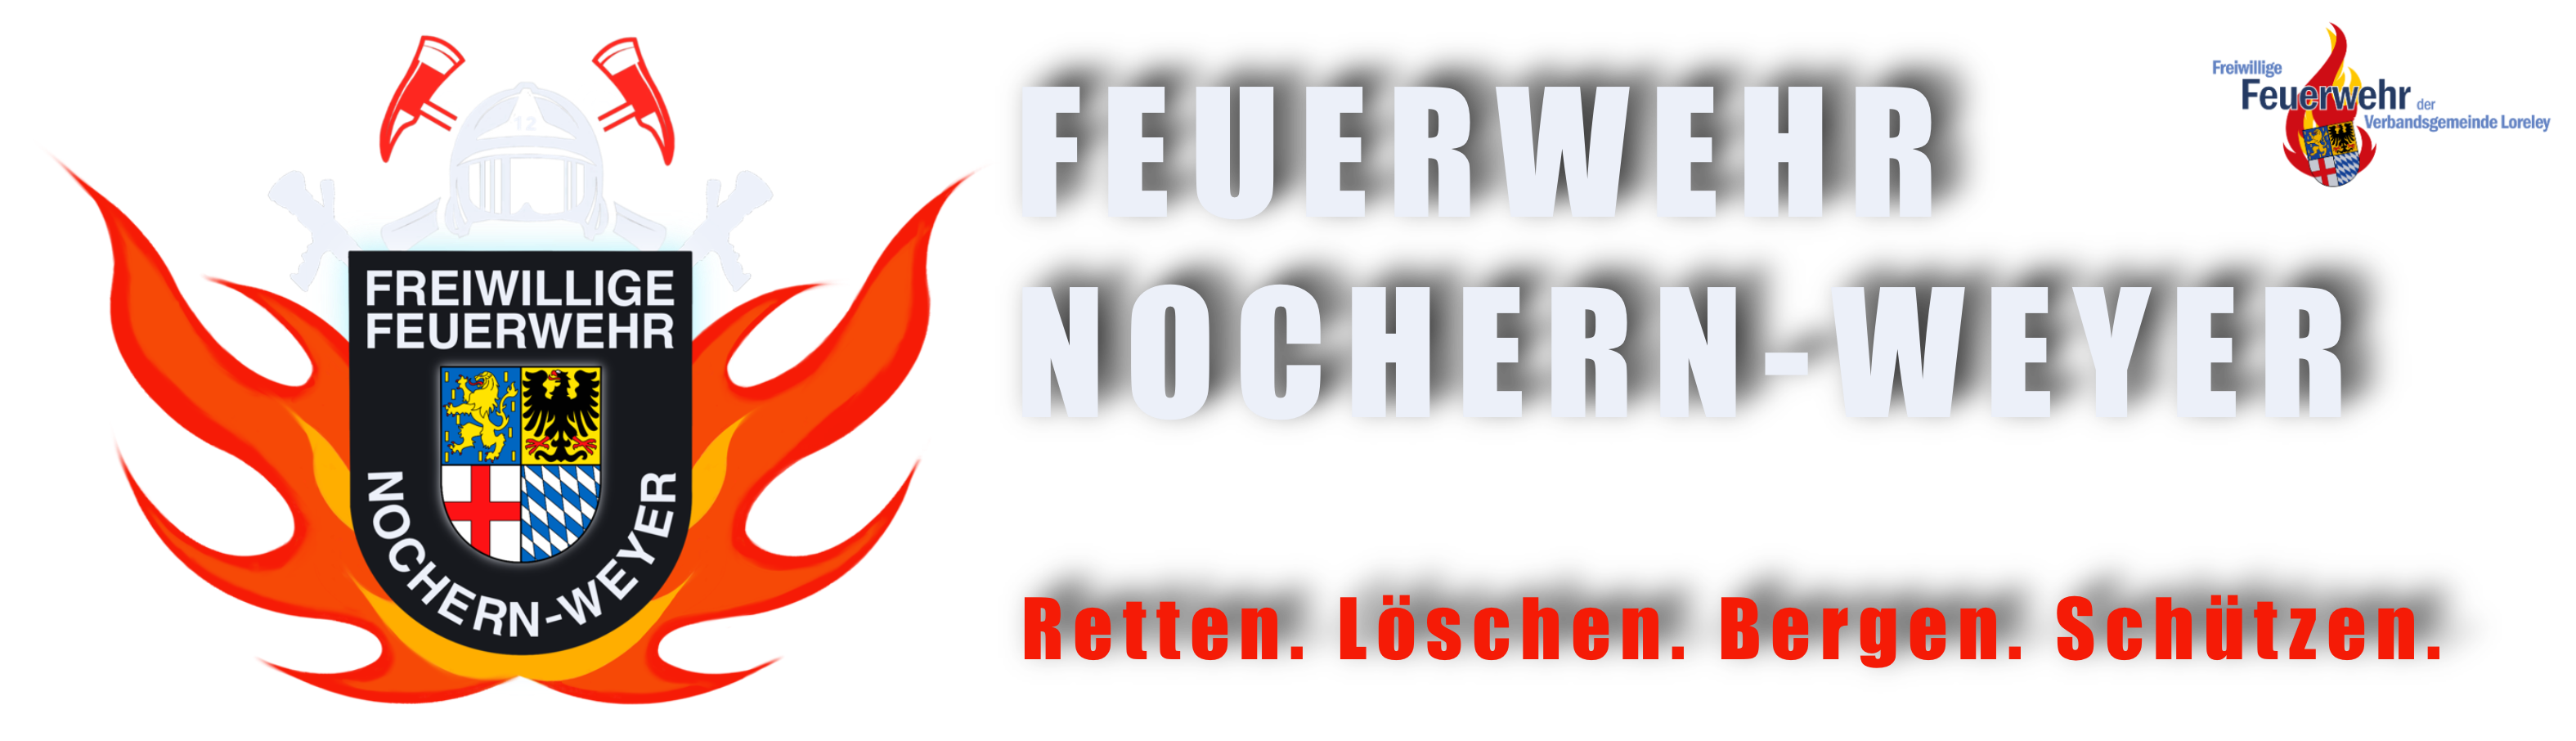 FFW-Nochern